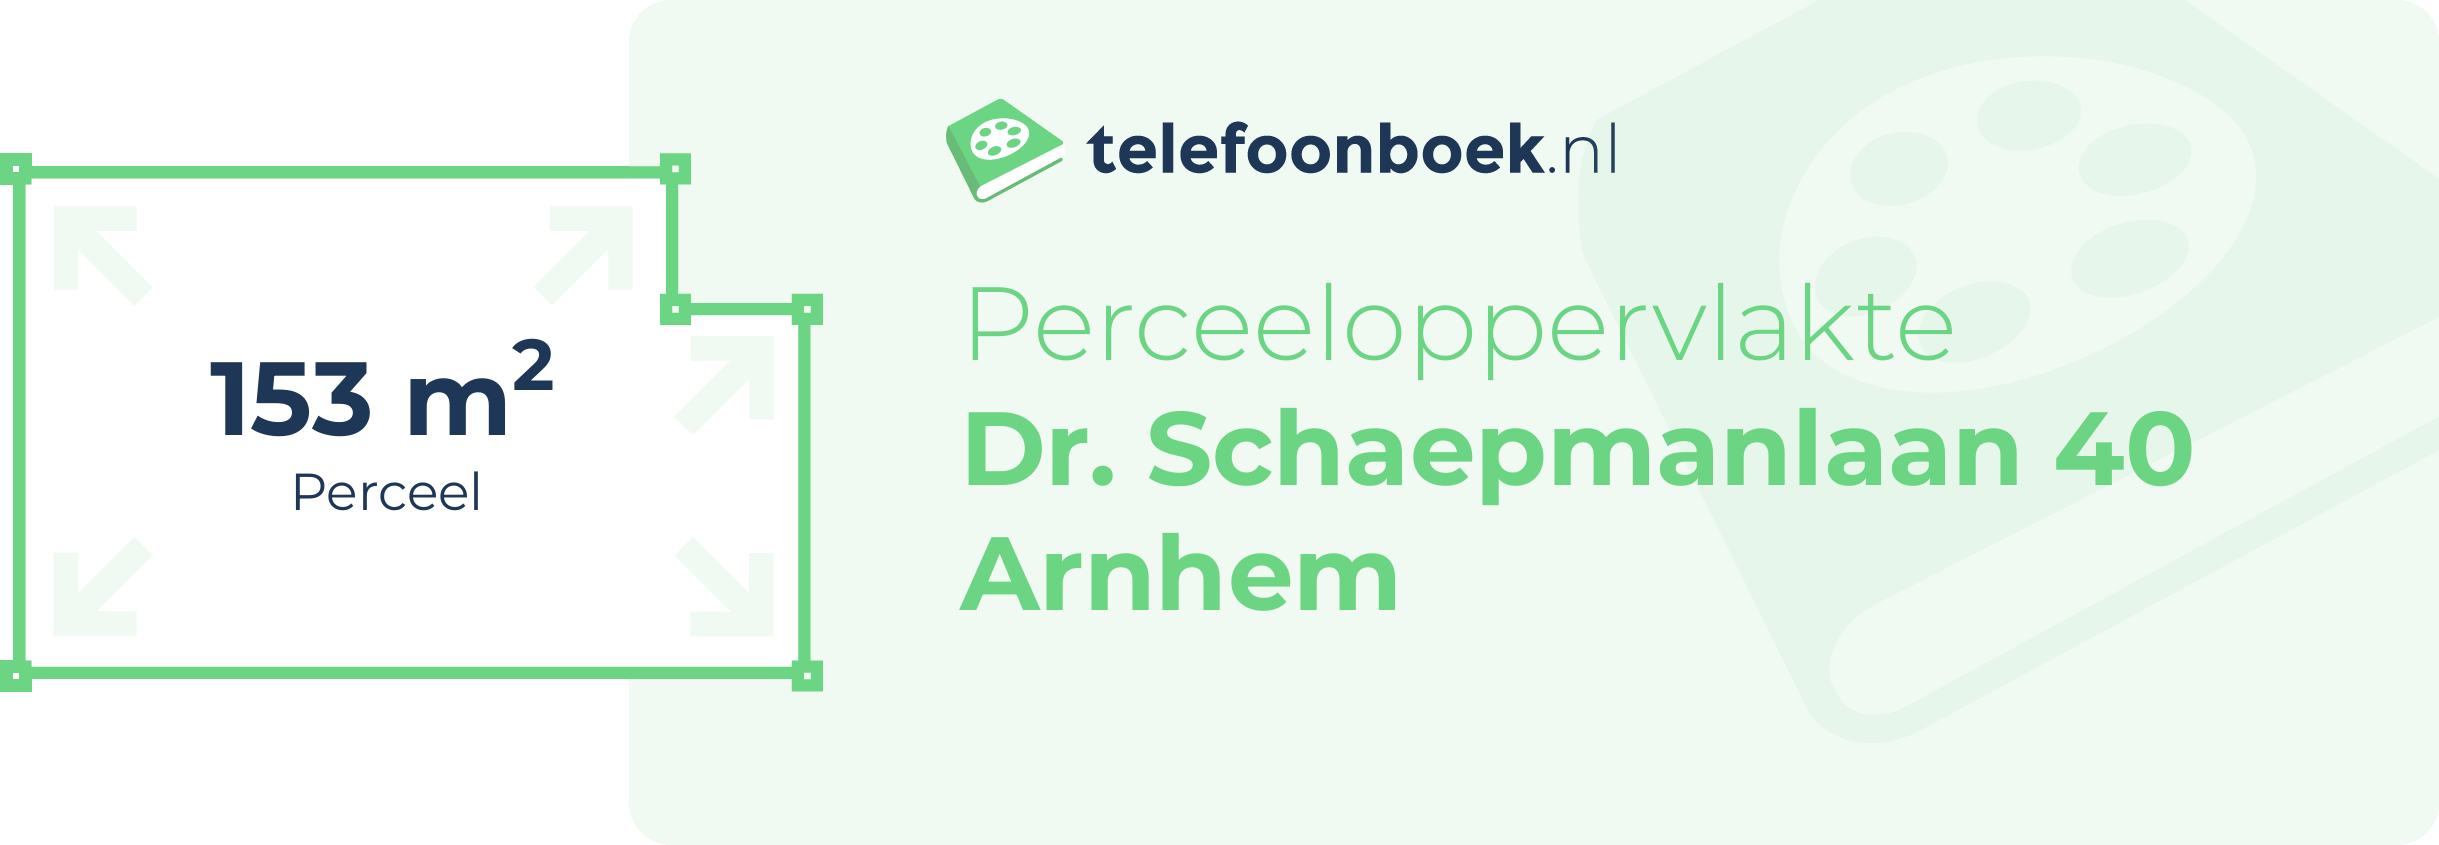 Perceeloppervlakte Dr. Schaepmanlaan 40 Arnhem